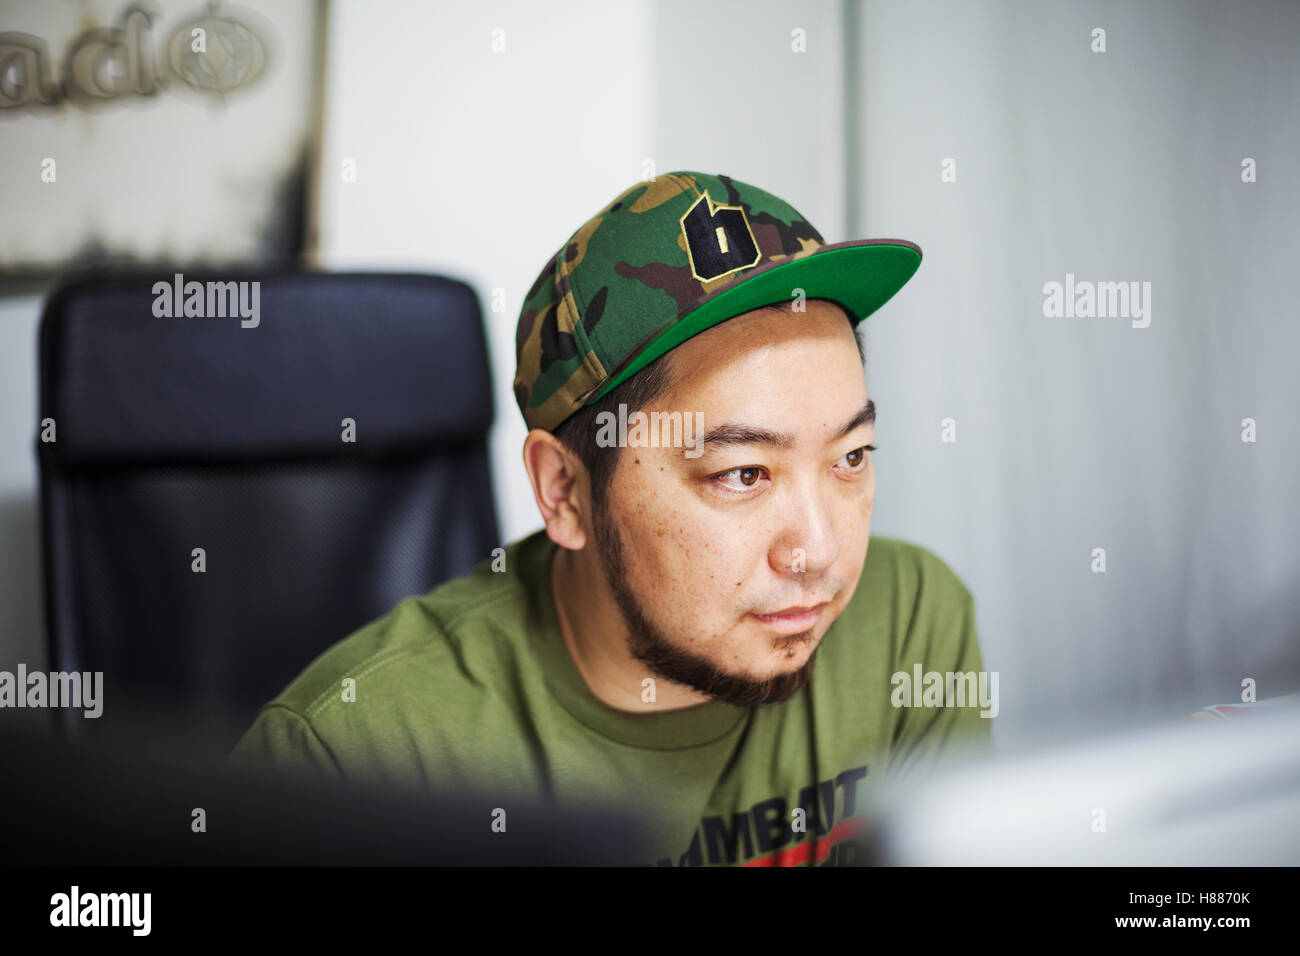 Design Studio. A man wearing a baseball cap looking at a screen. Stock Photo